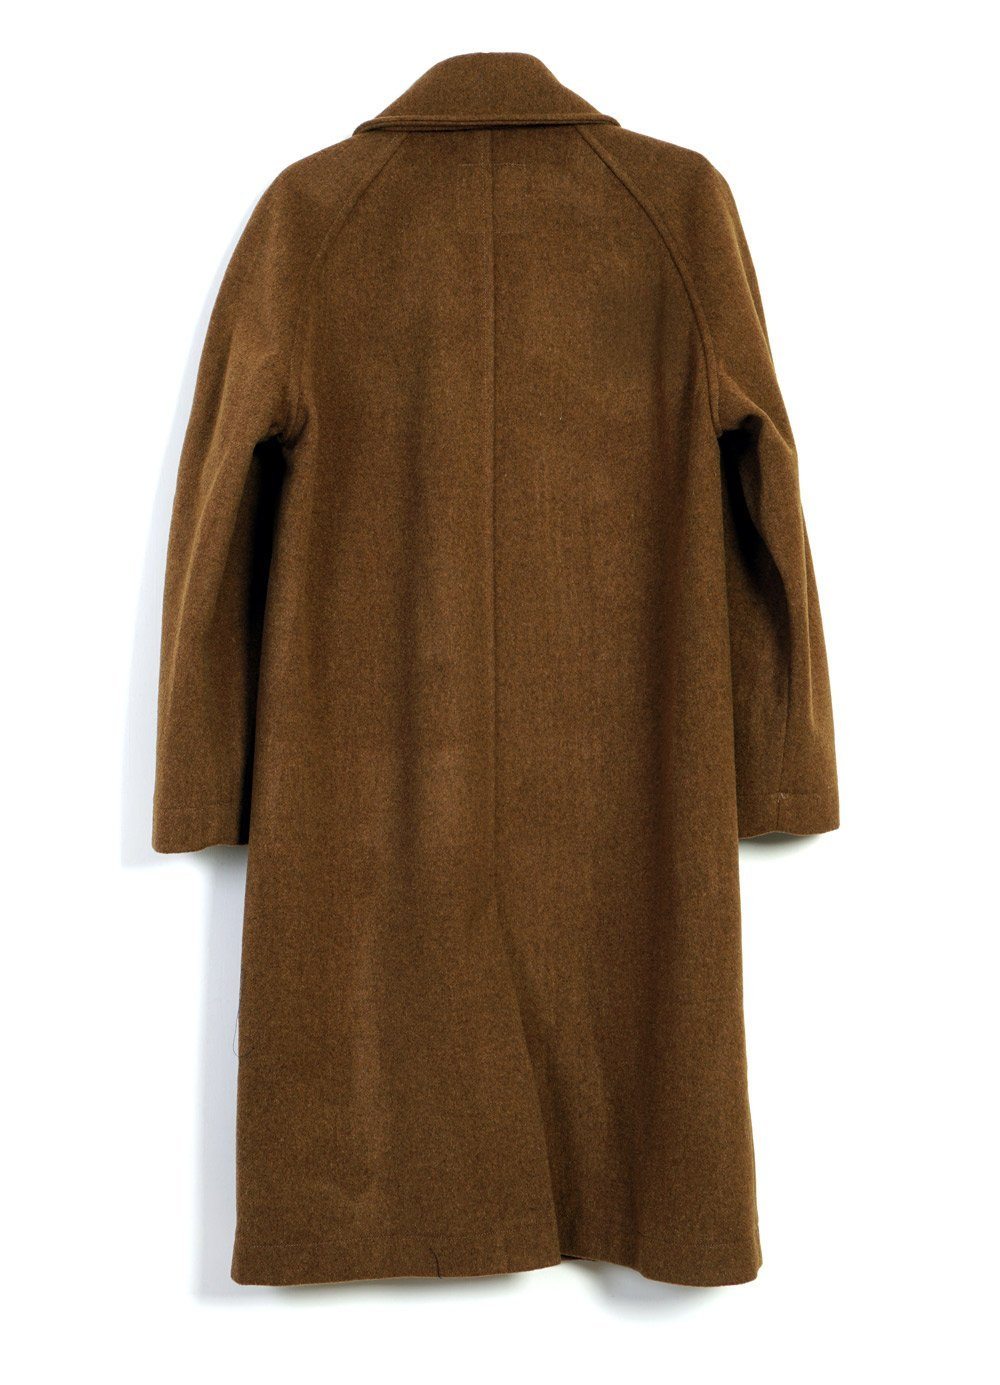 HANSEN Garments - SIGURD | Long Wool Felt Coat | Cognac - HANSEN Garments